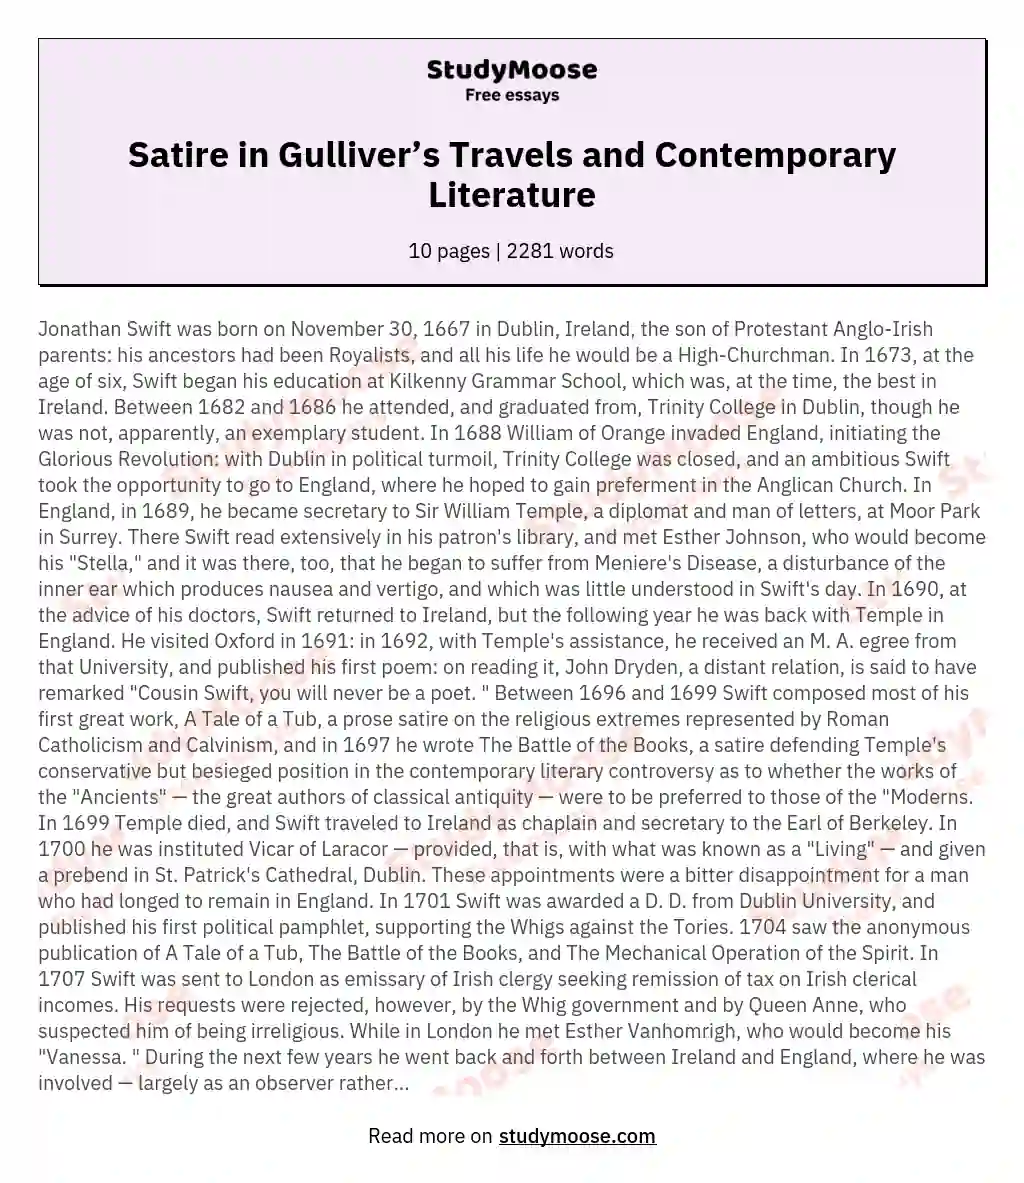 Satire in Gulliver’s Travels and Contemporary Literature